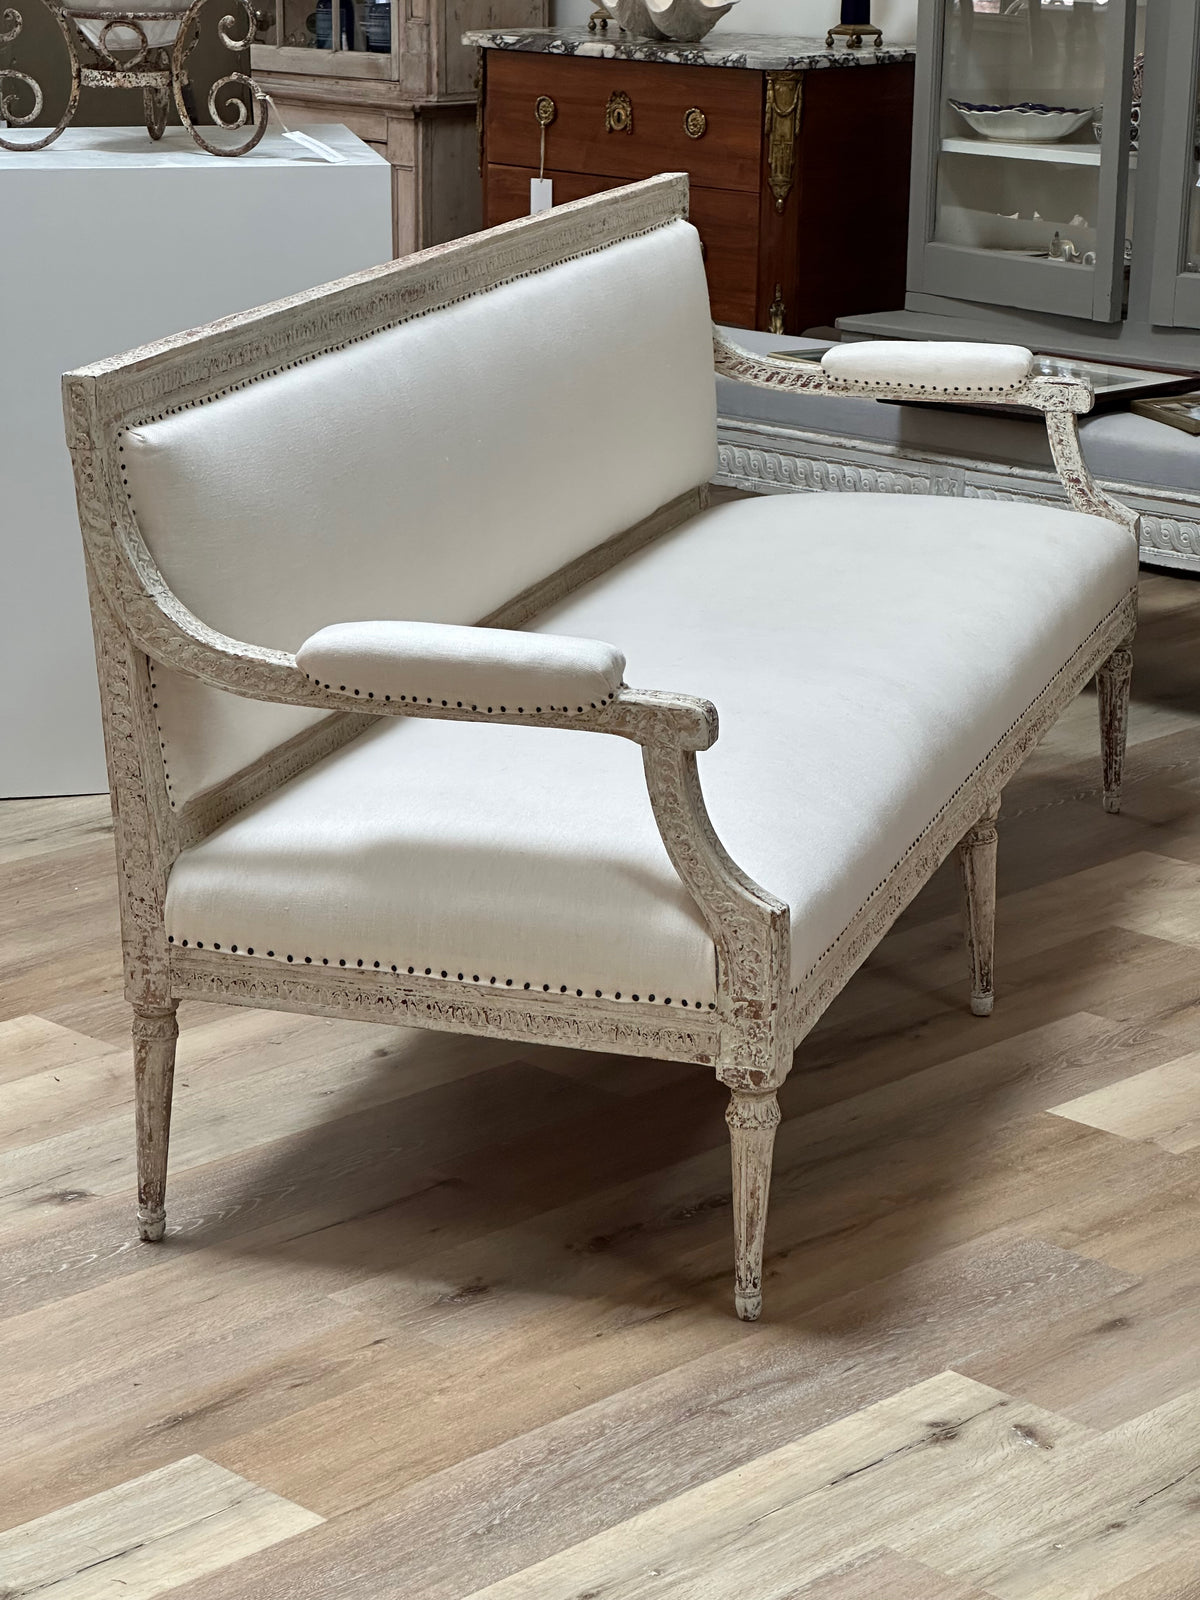 A Swedish Neoclassical Style Sofa, Late 18th- 19th century